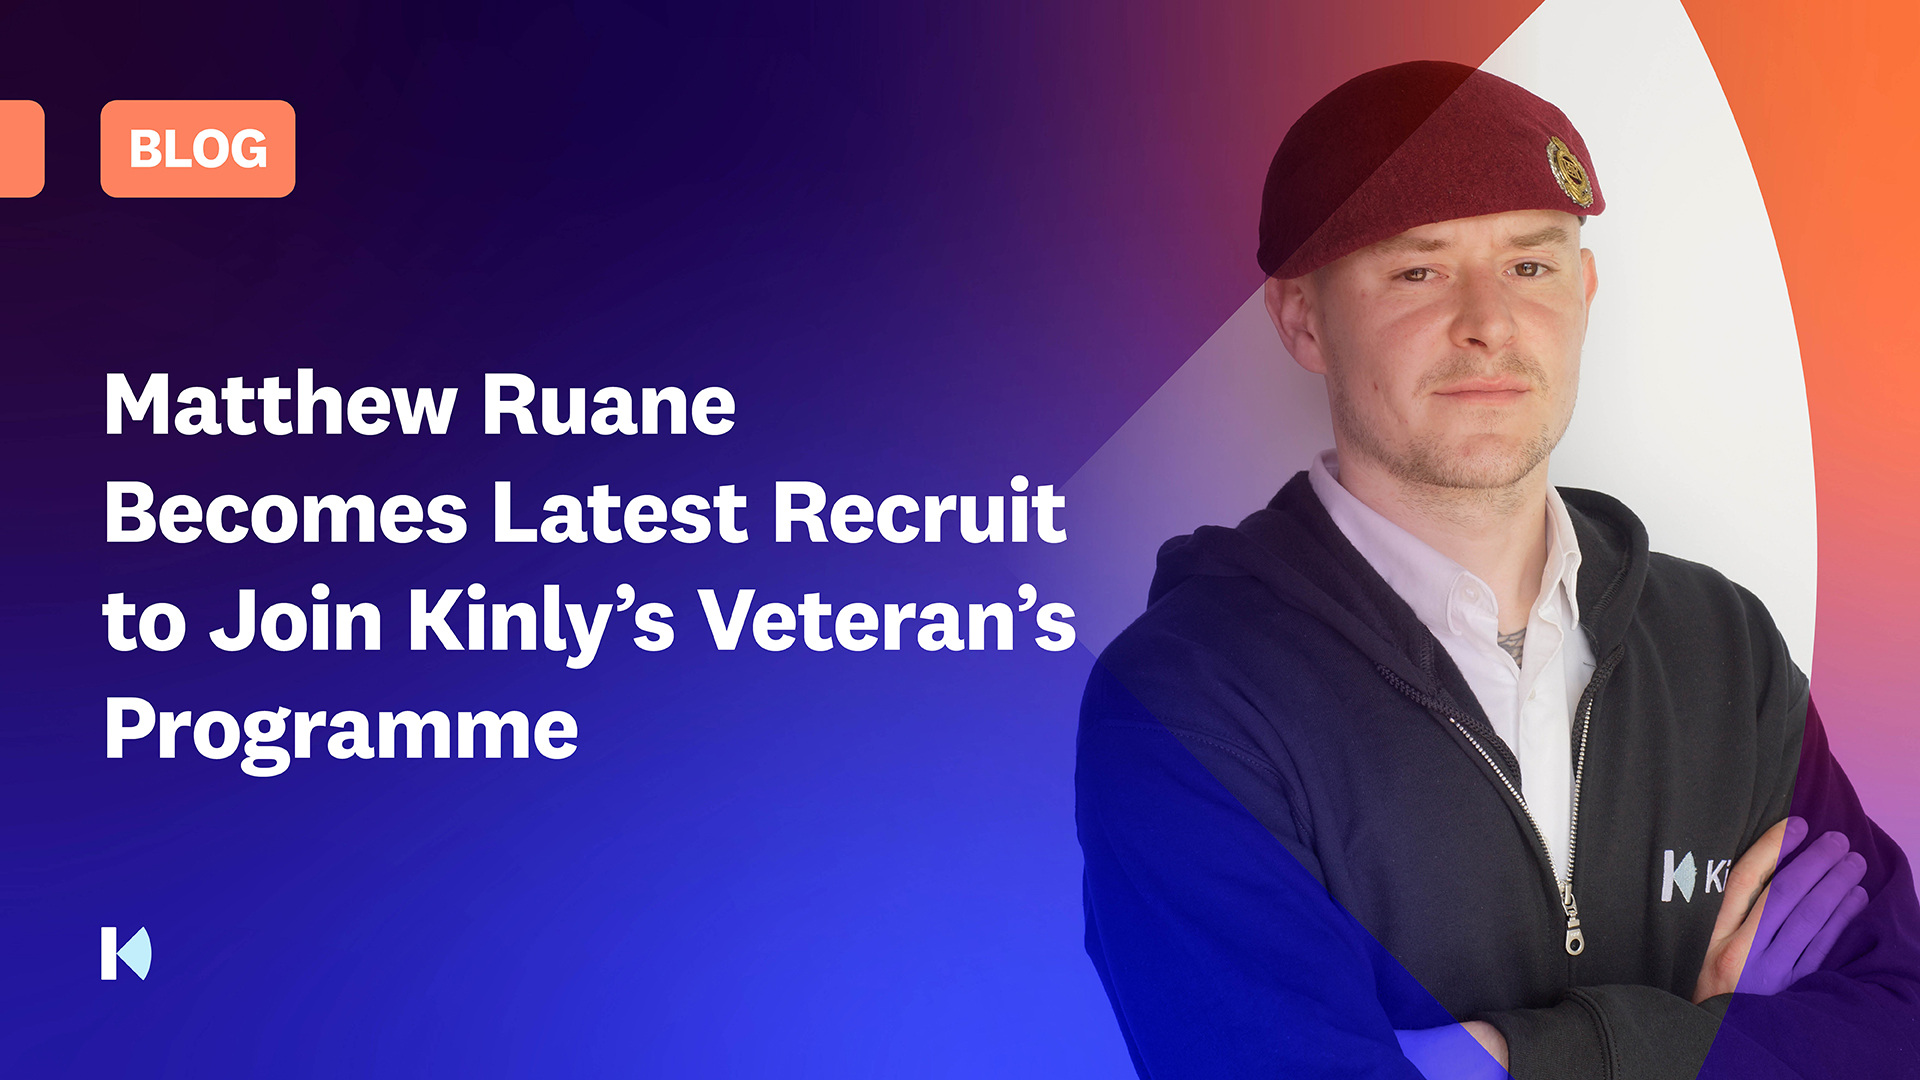 Kinly Veteran's Programme Matthew Ruane